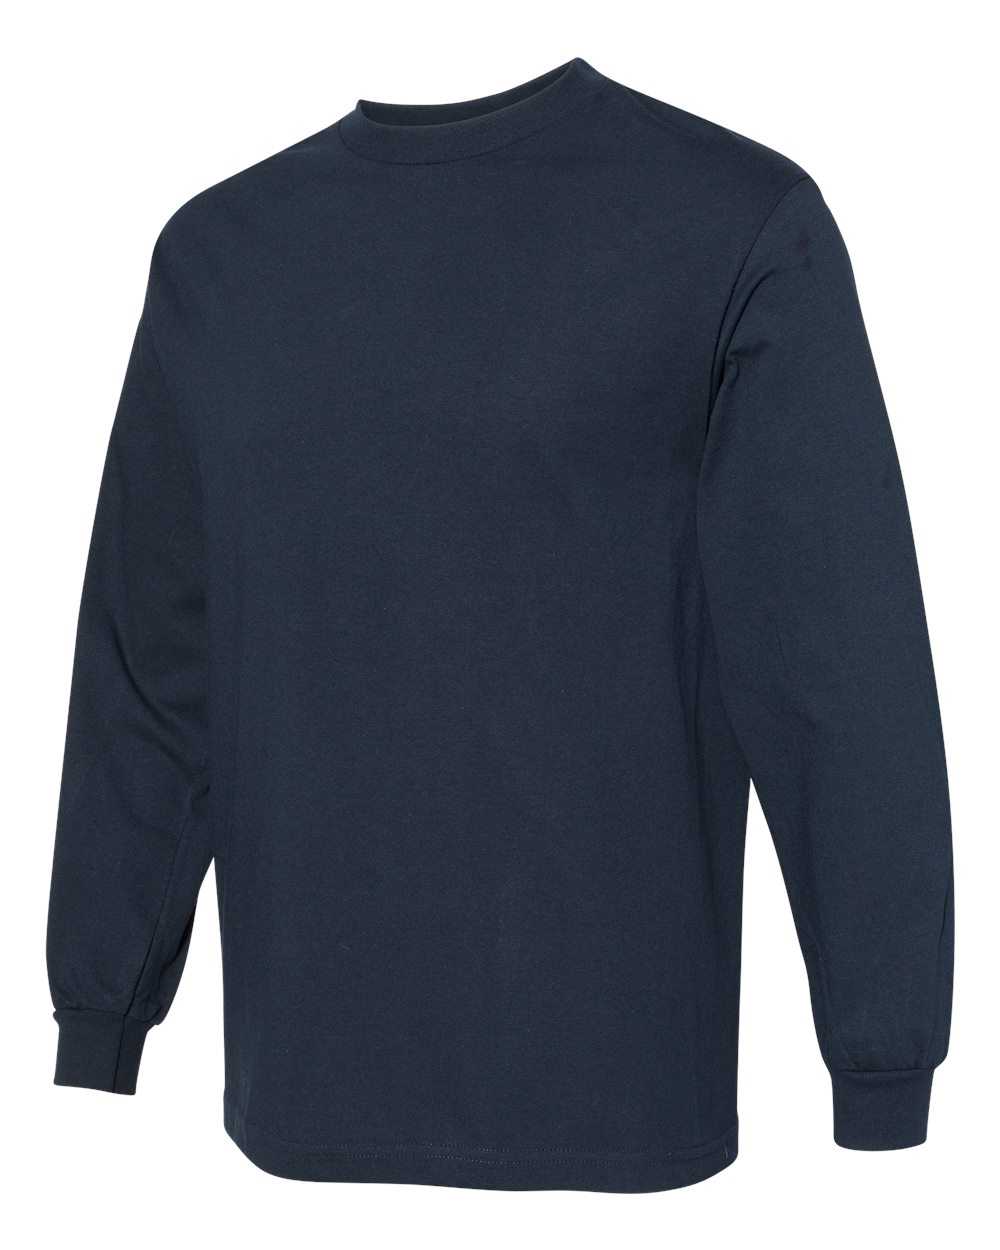 American Apparel 1304 Unisex Heavyweight Cotton Long Sleeve T-Shirt - Navy - HIT a Double